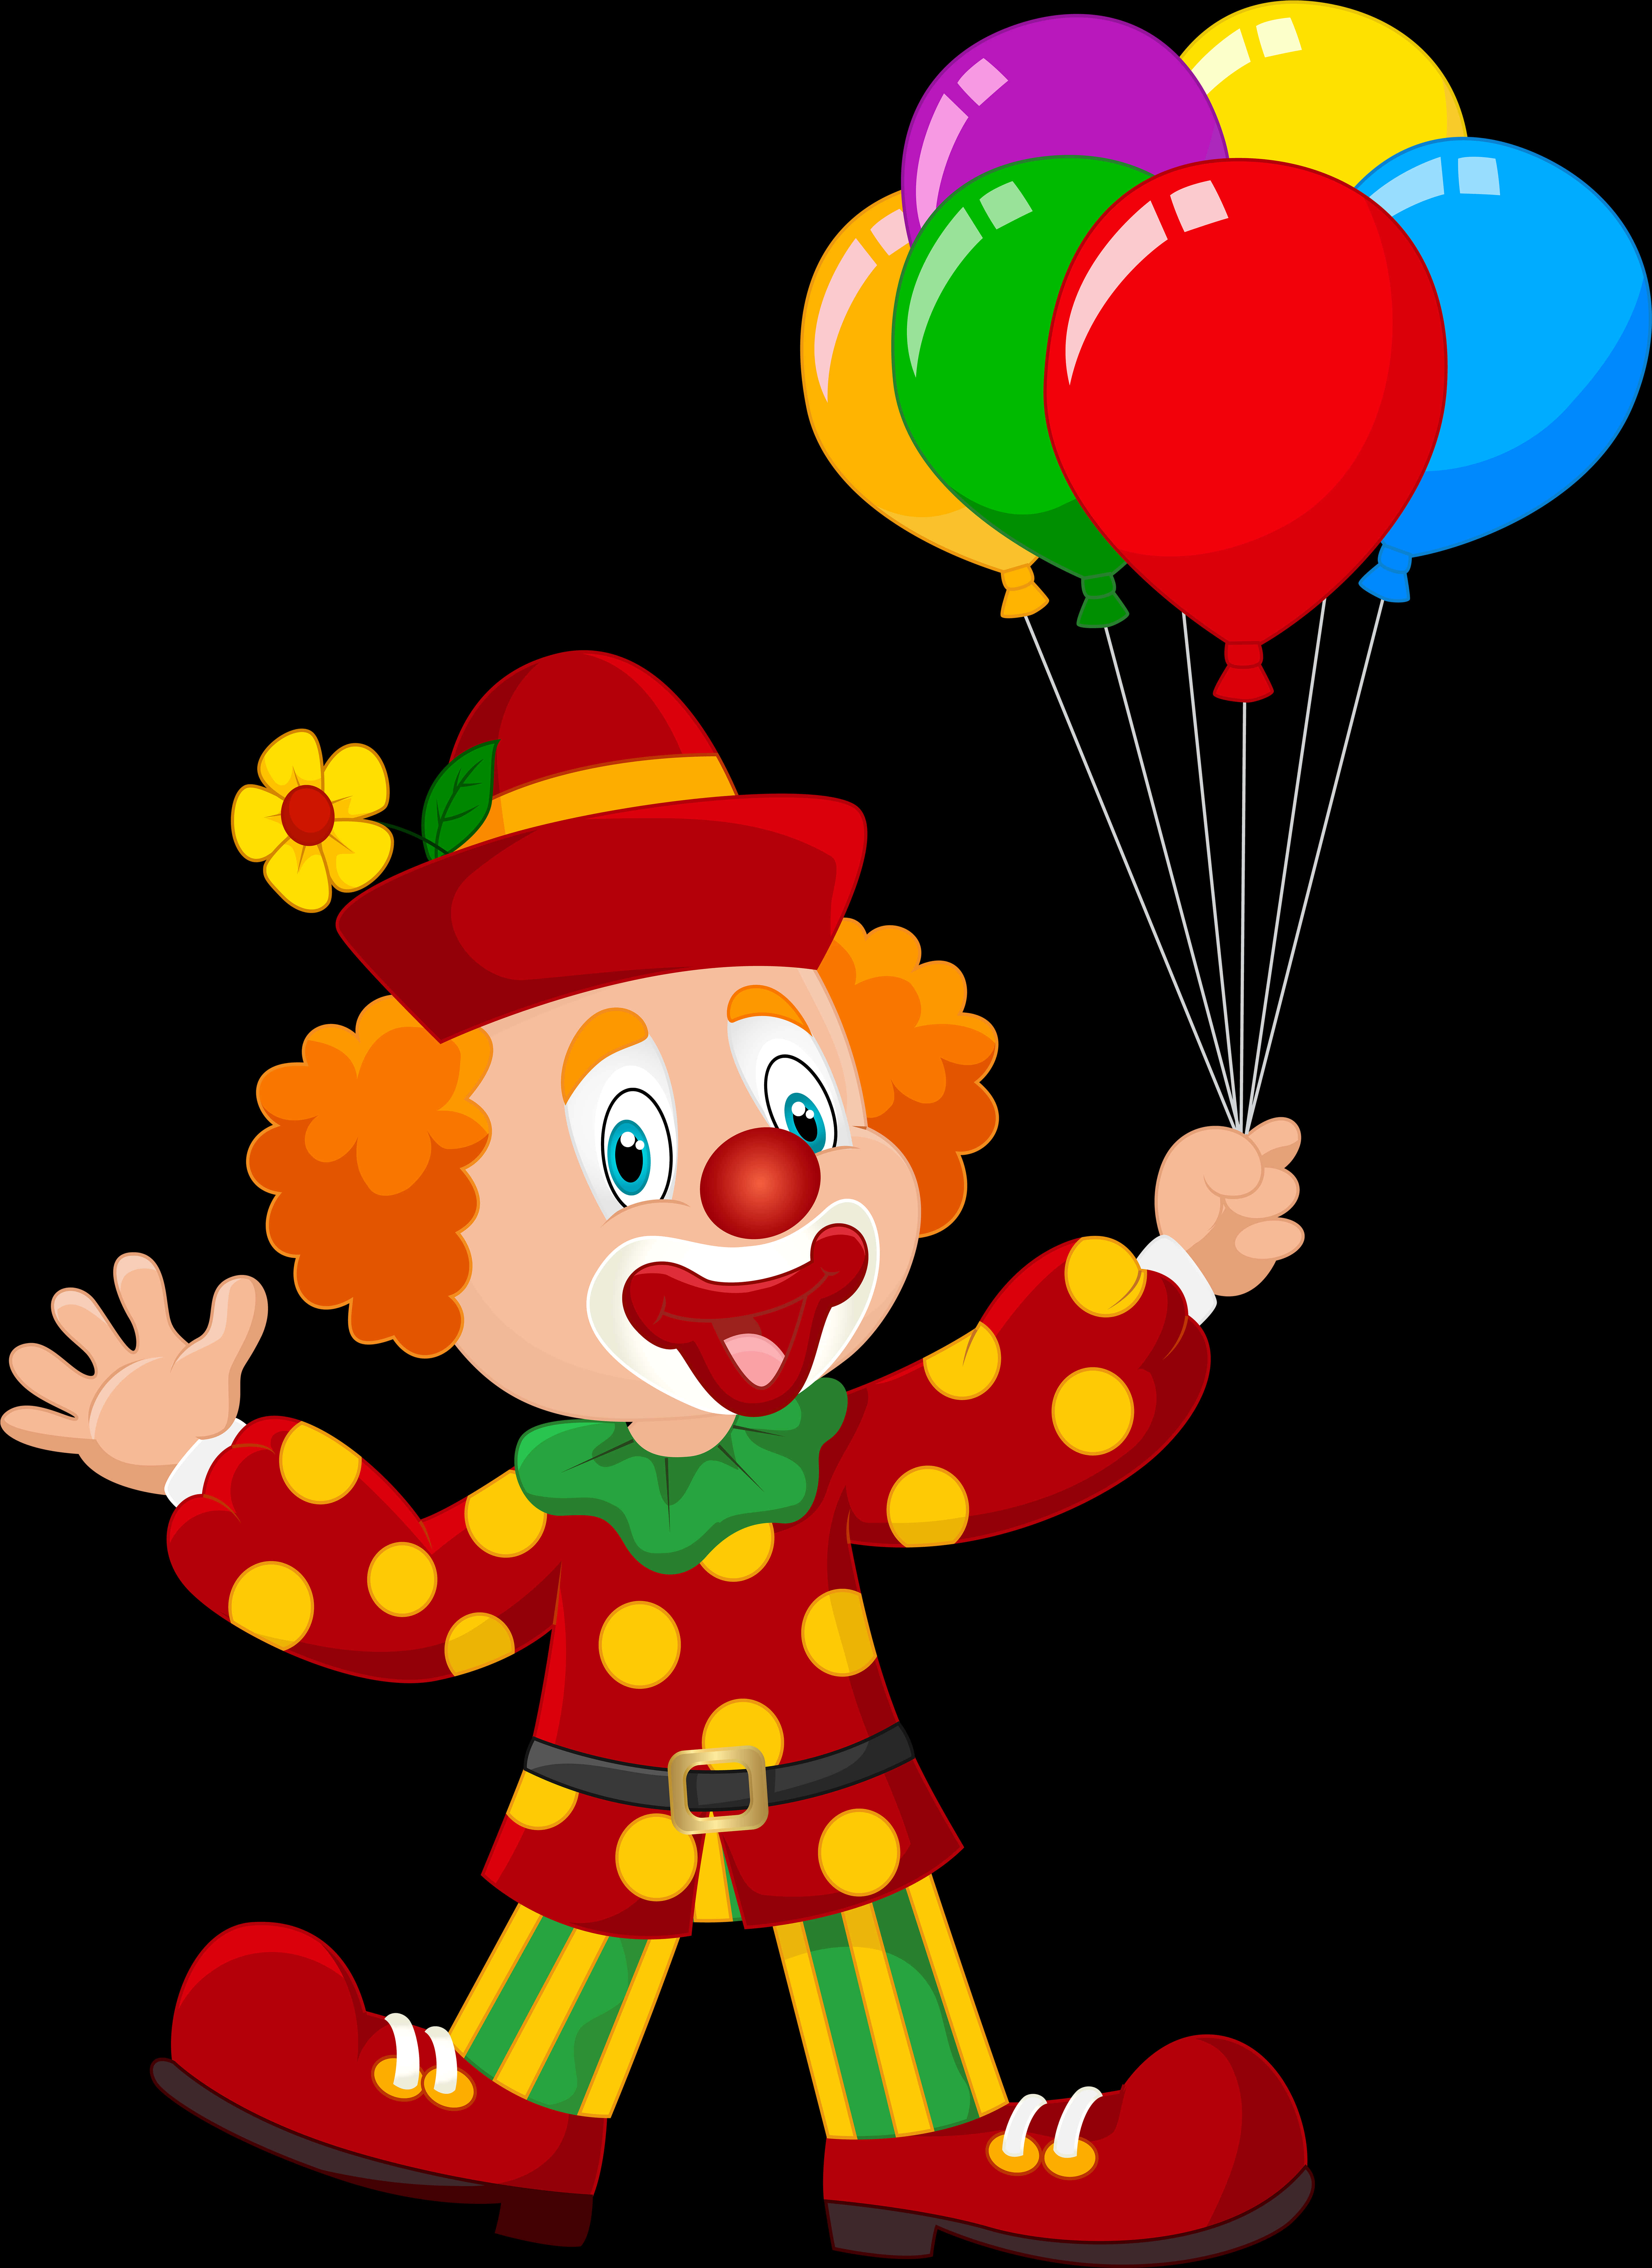 A Cartoon Clown Holding Balloons